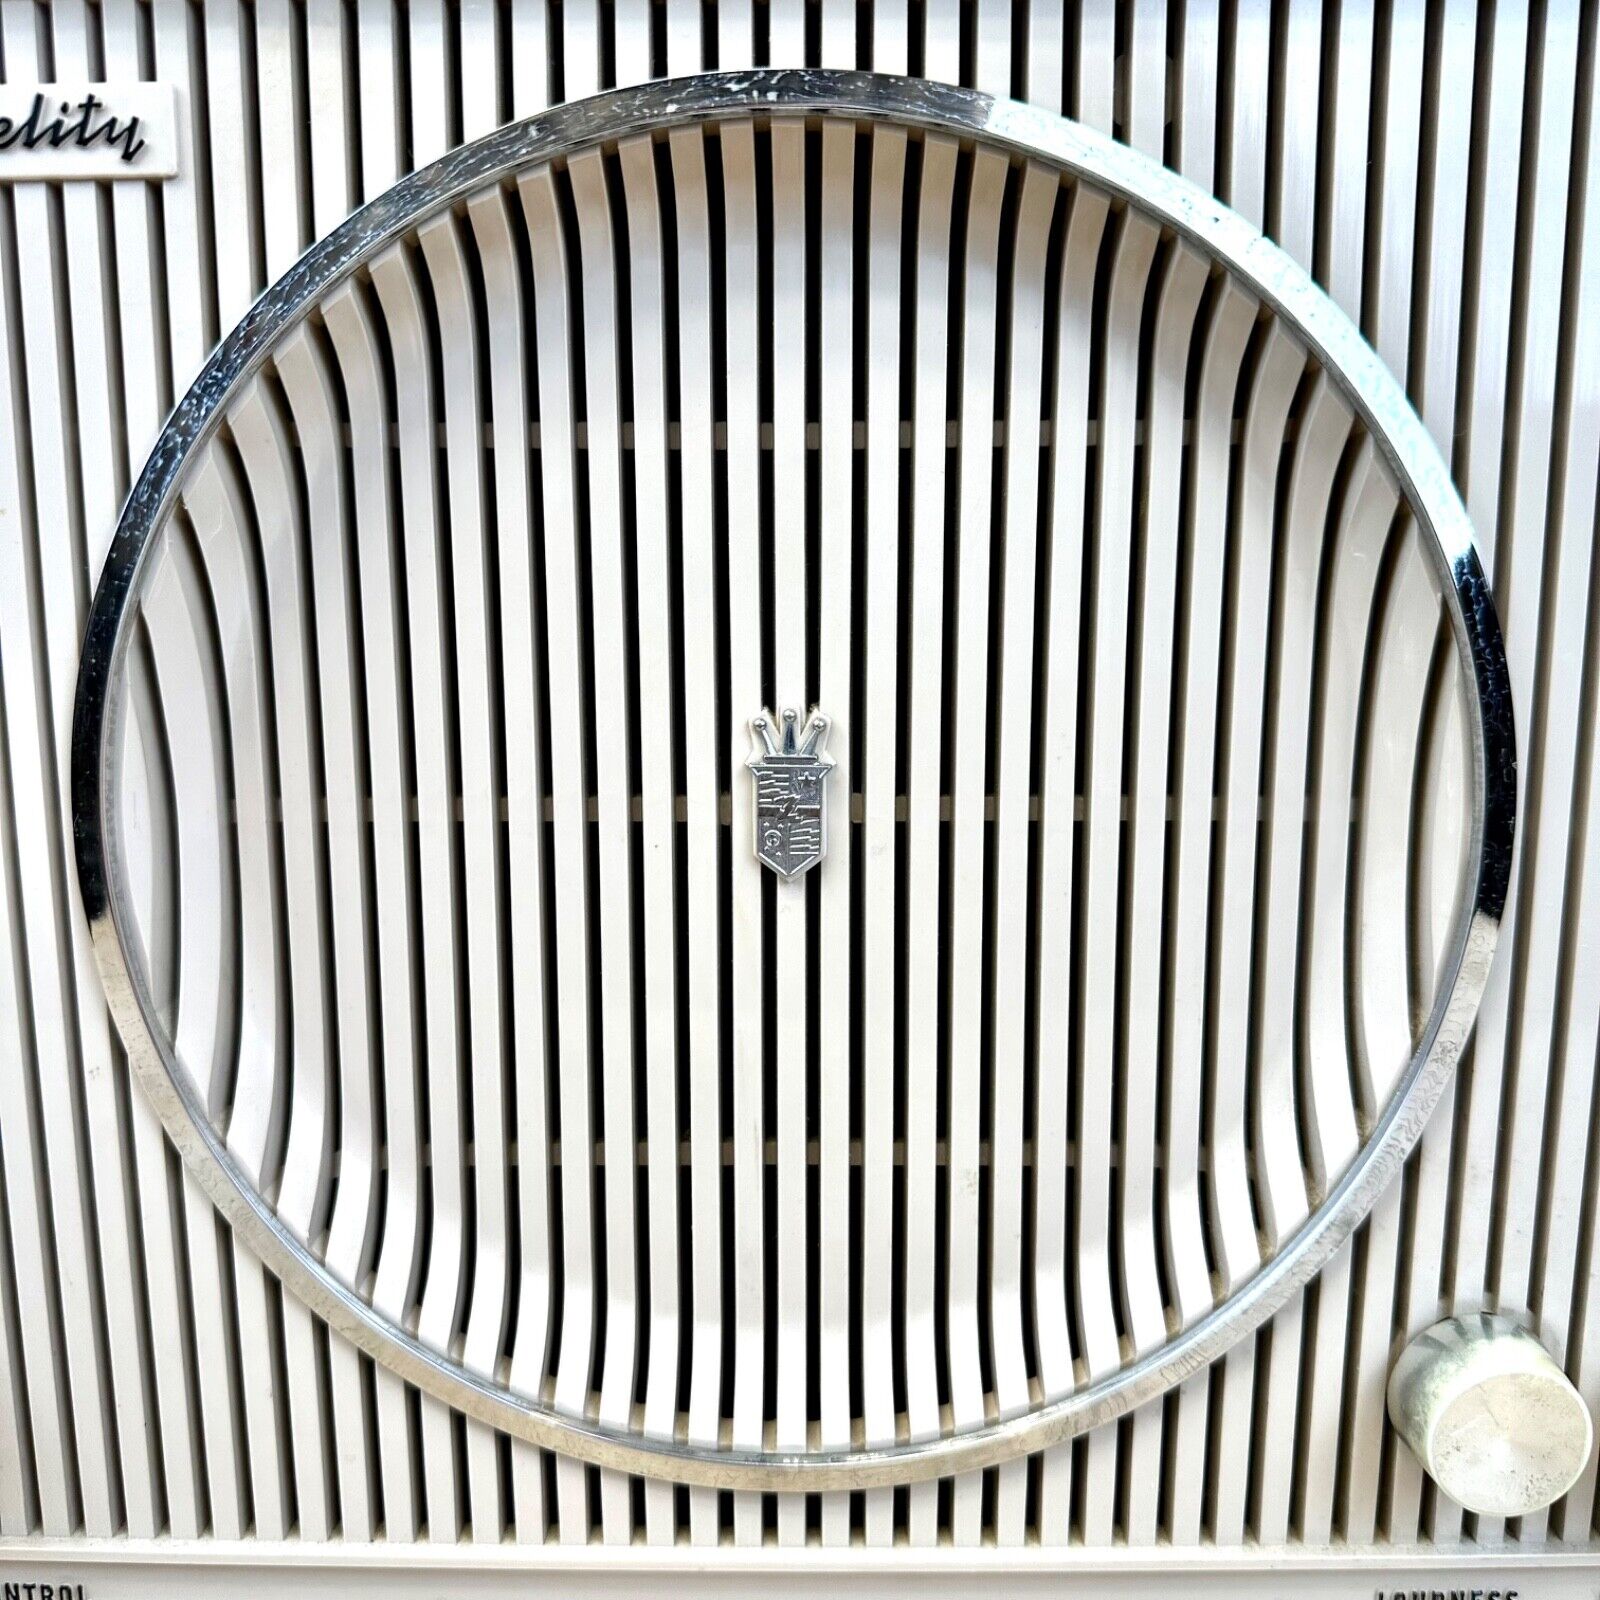 Antique Zenith High Fidelity Tube Radio Model #S-46351 Sound Great New String